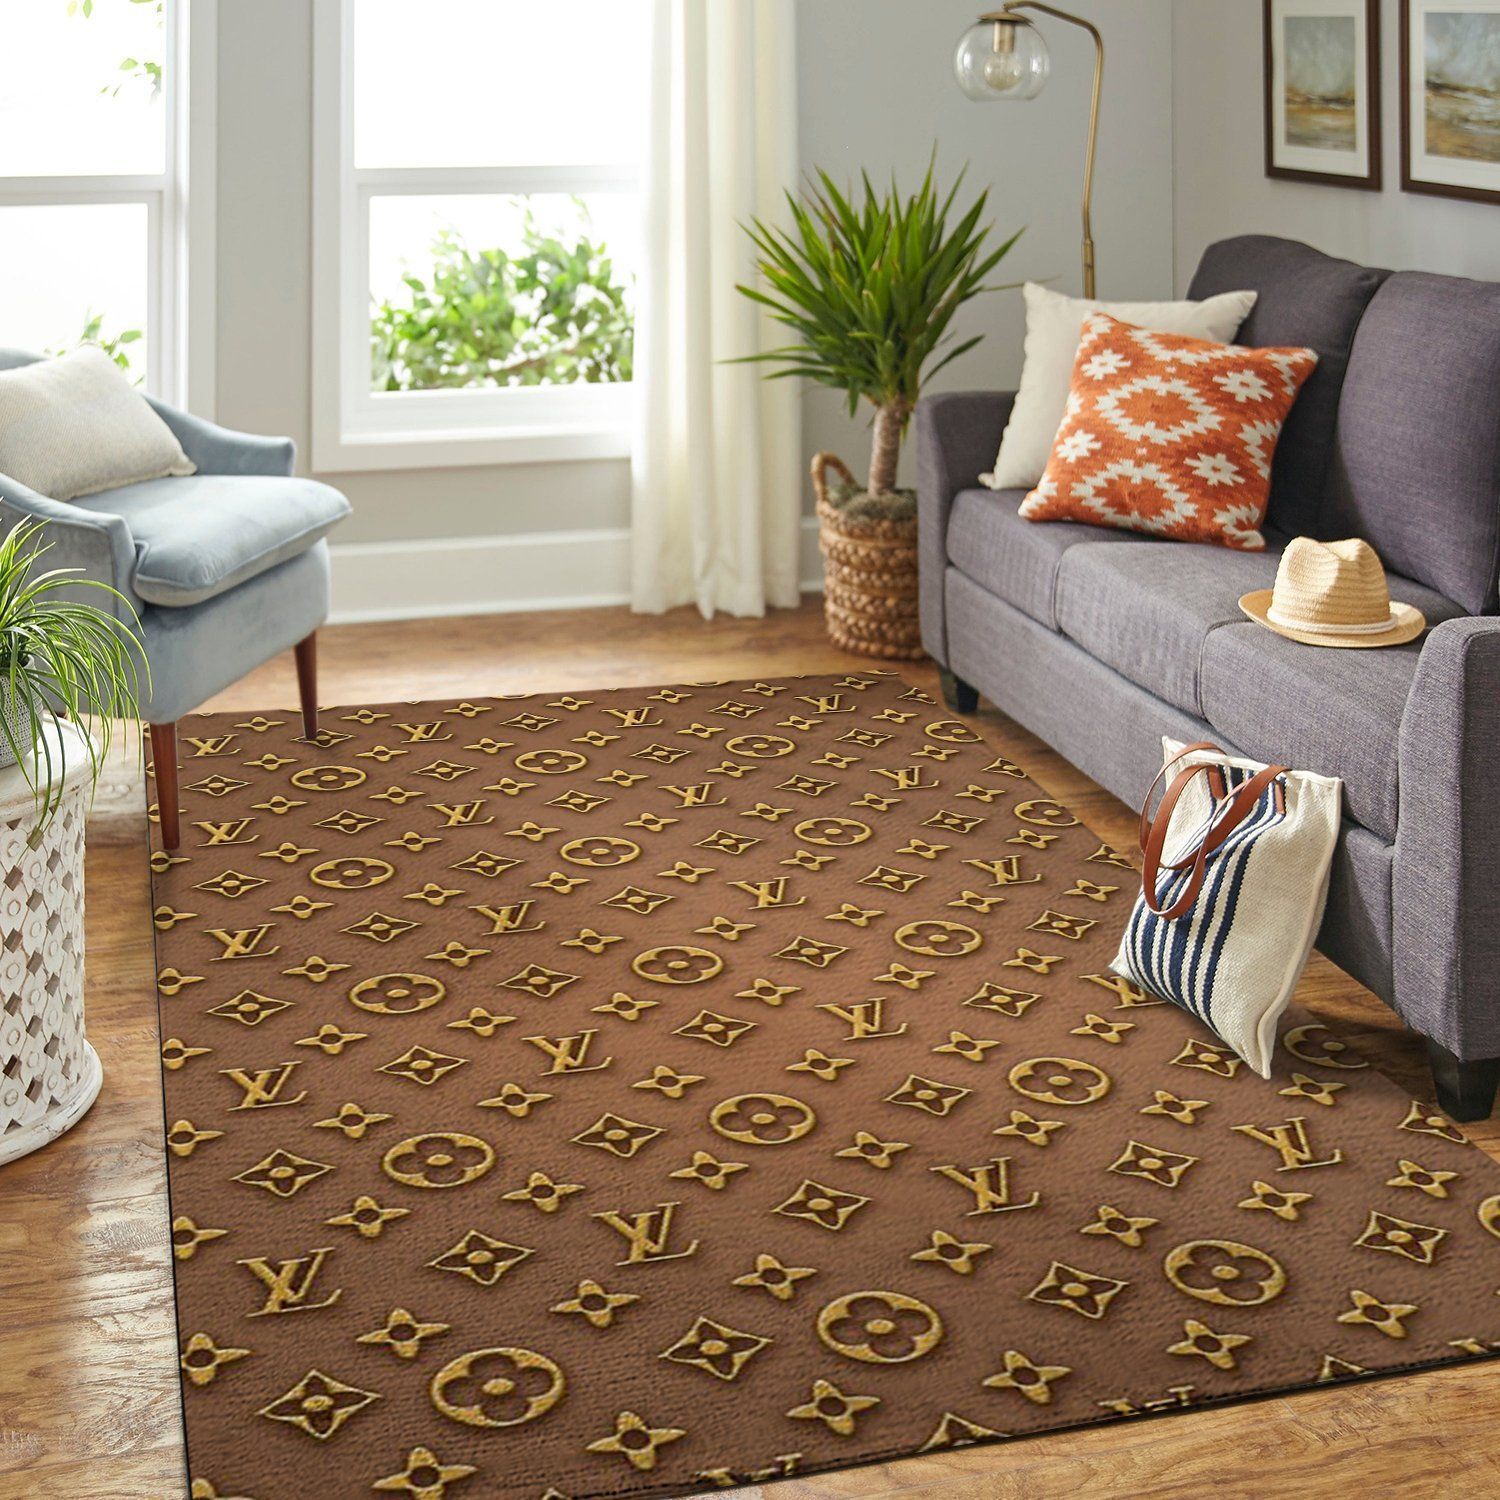 Louis Vuitton Area Gold Luxury Fashion Brand Rug Home Decor Door Mat Area Carpet